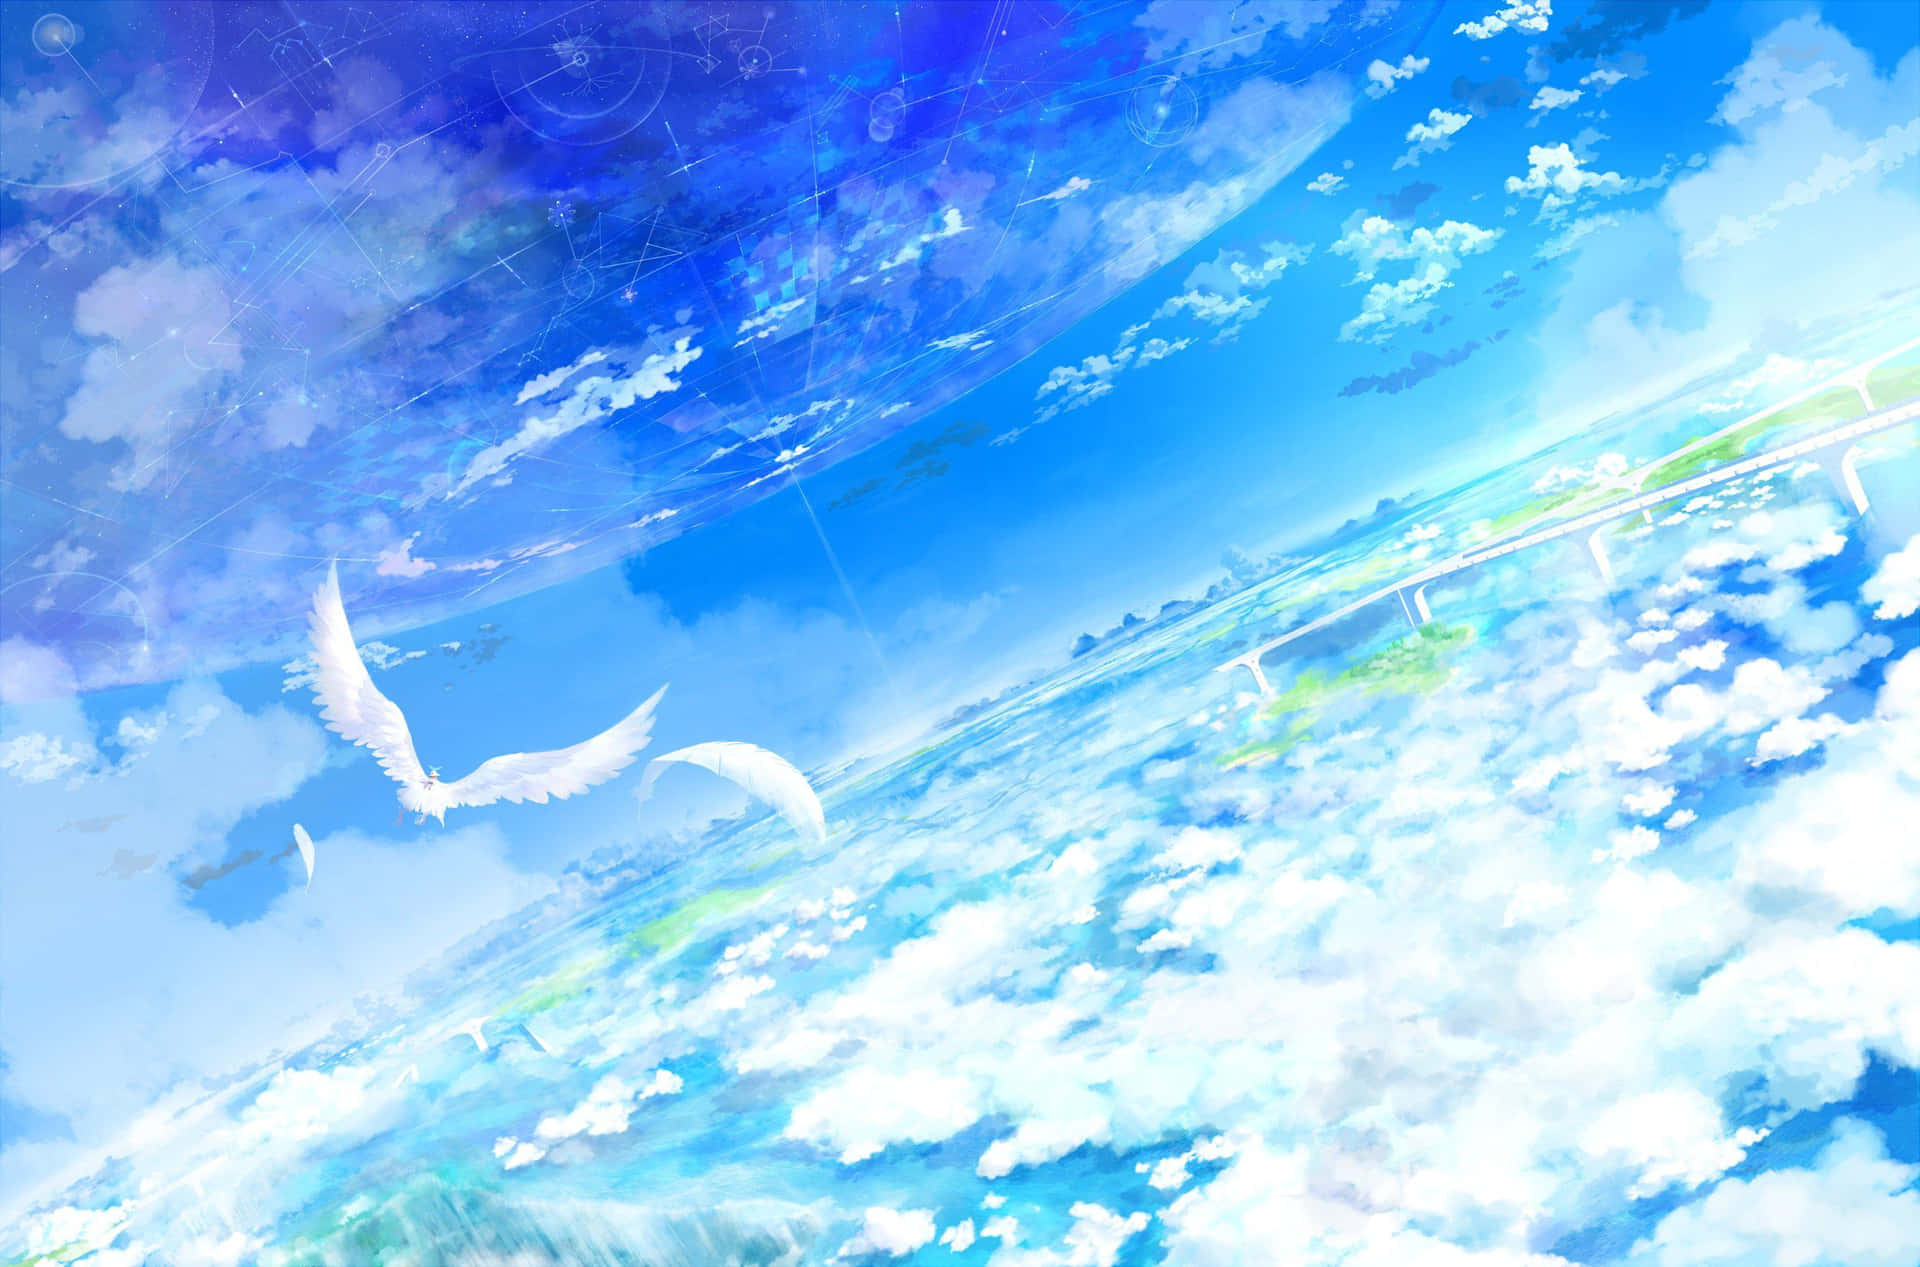 Gazing at the beautiful Anime Sky Wallpaper